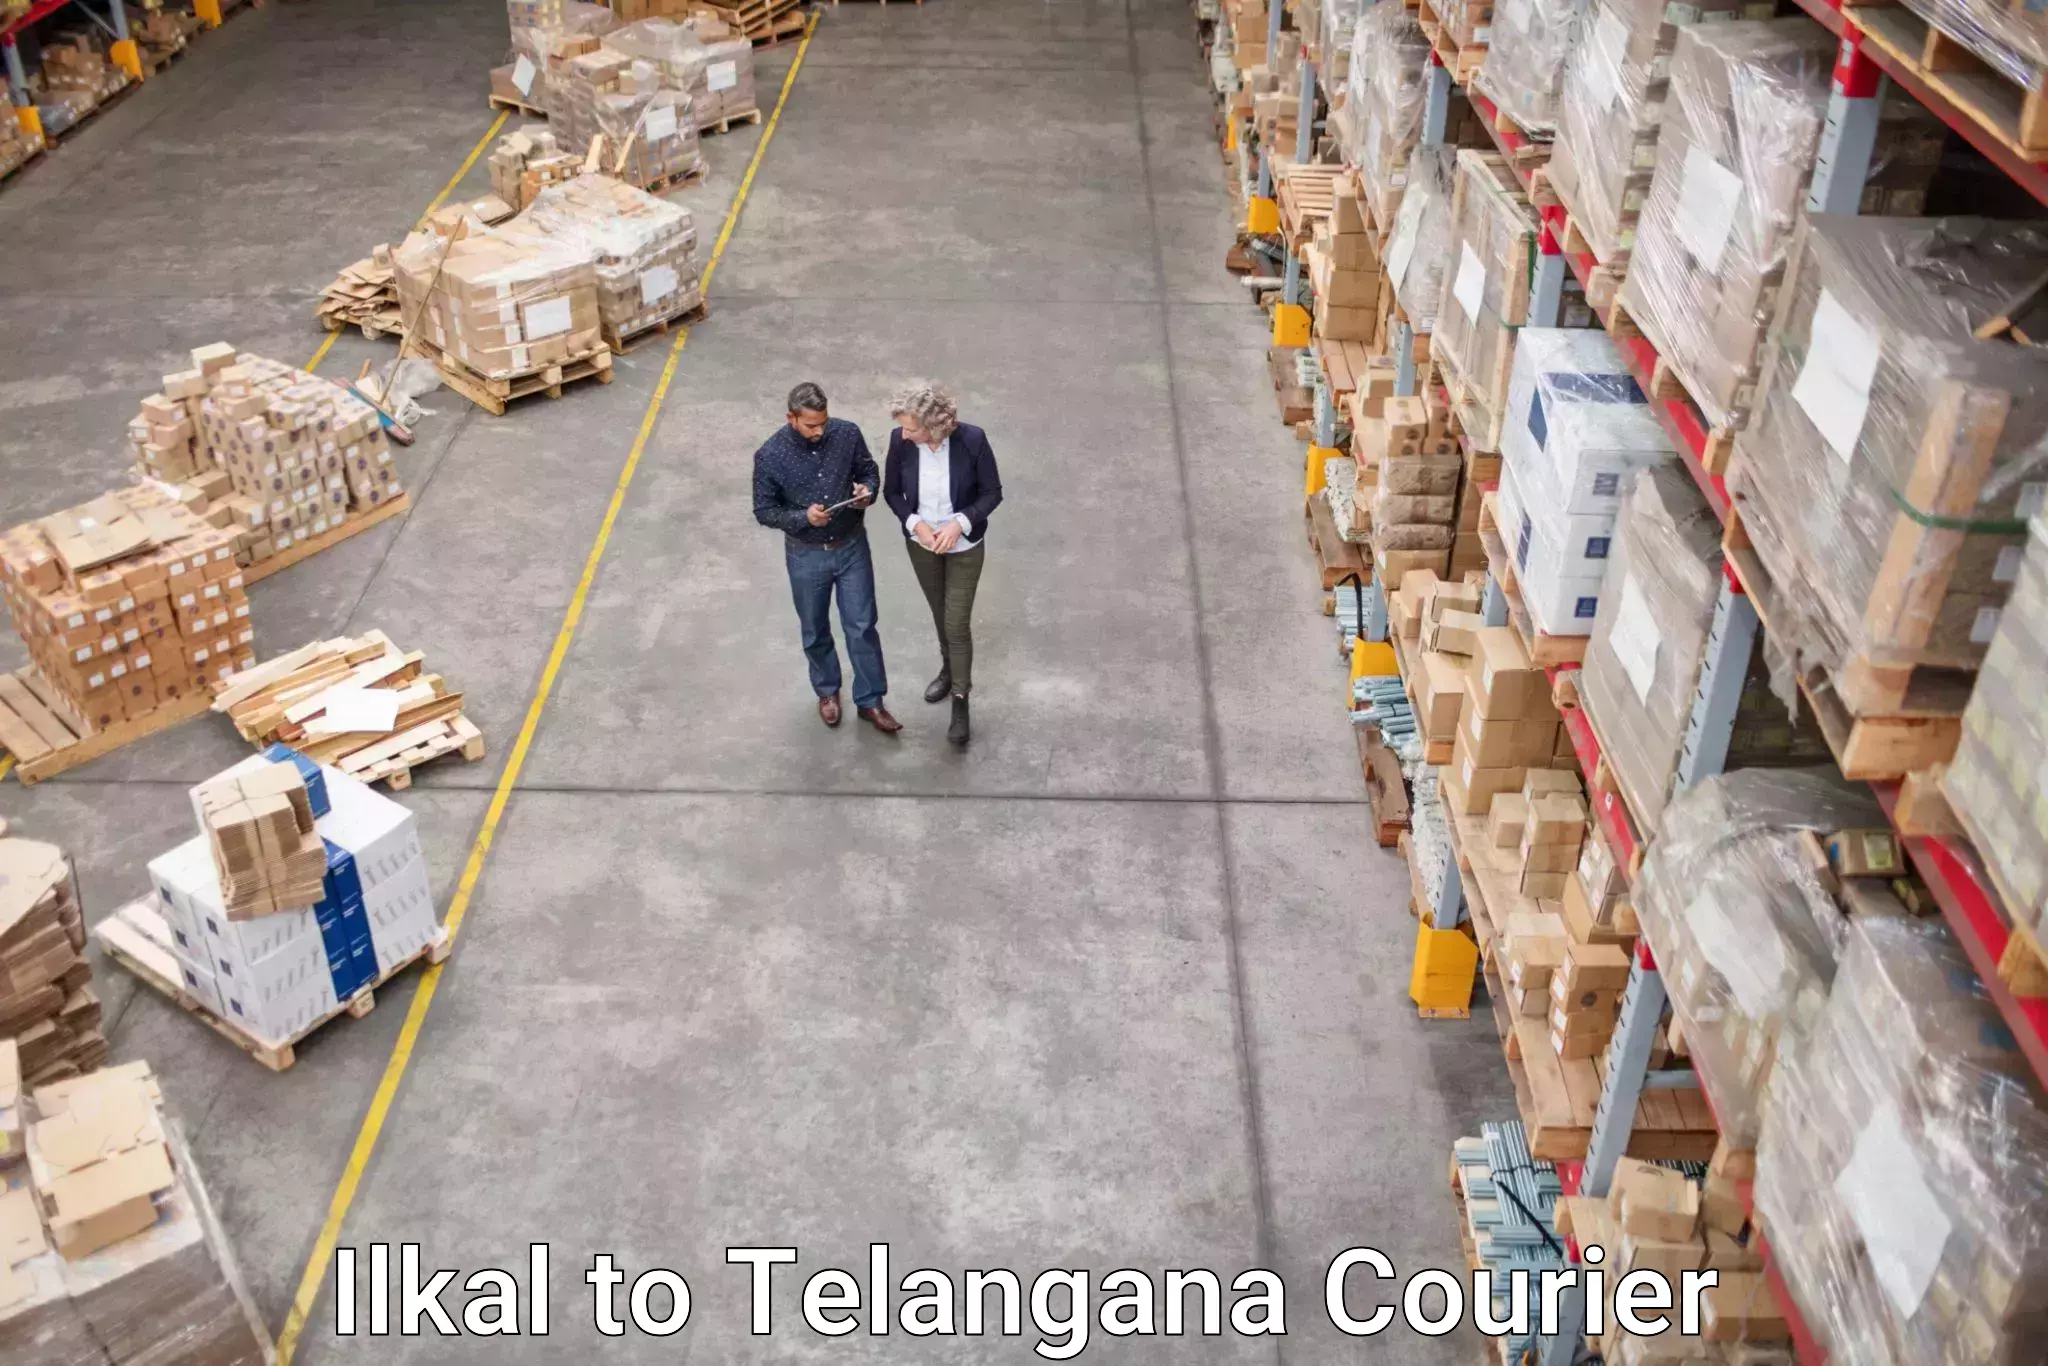 Courier service comparison Ilkal to Bhainsa